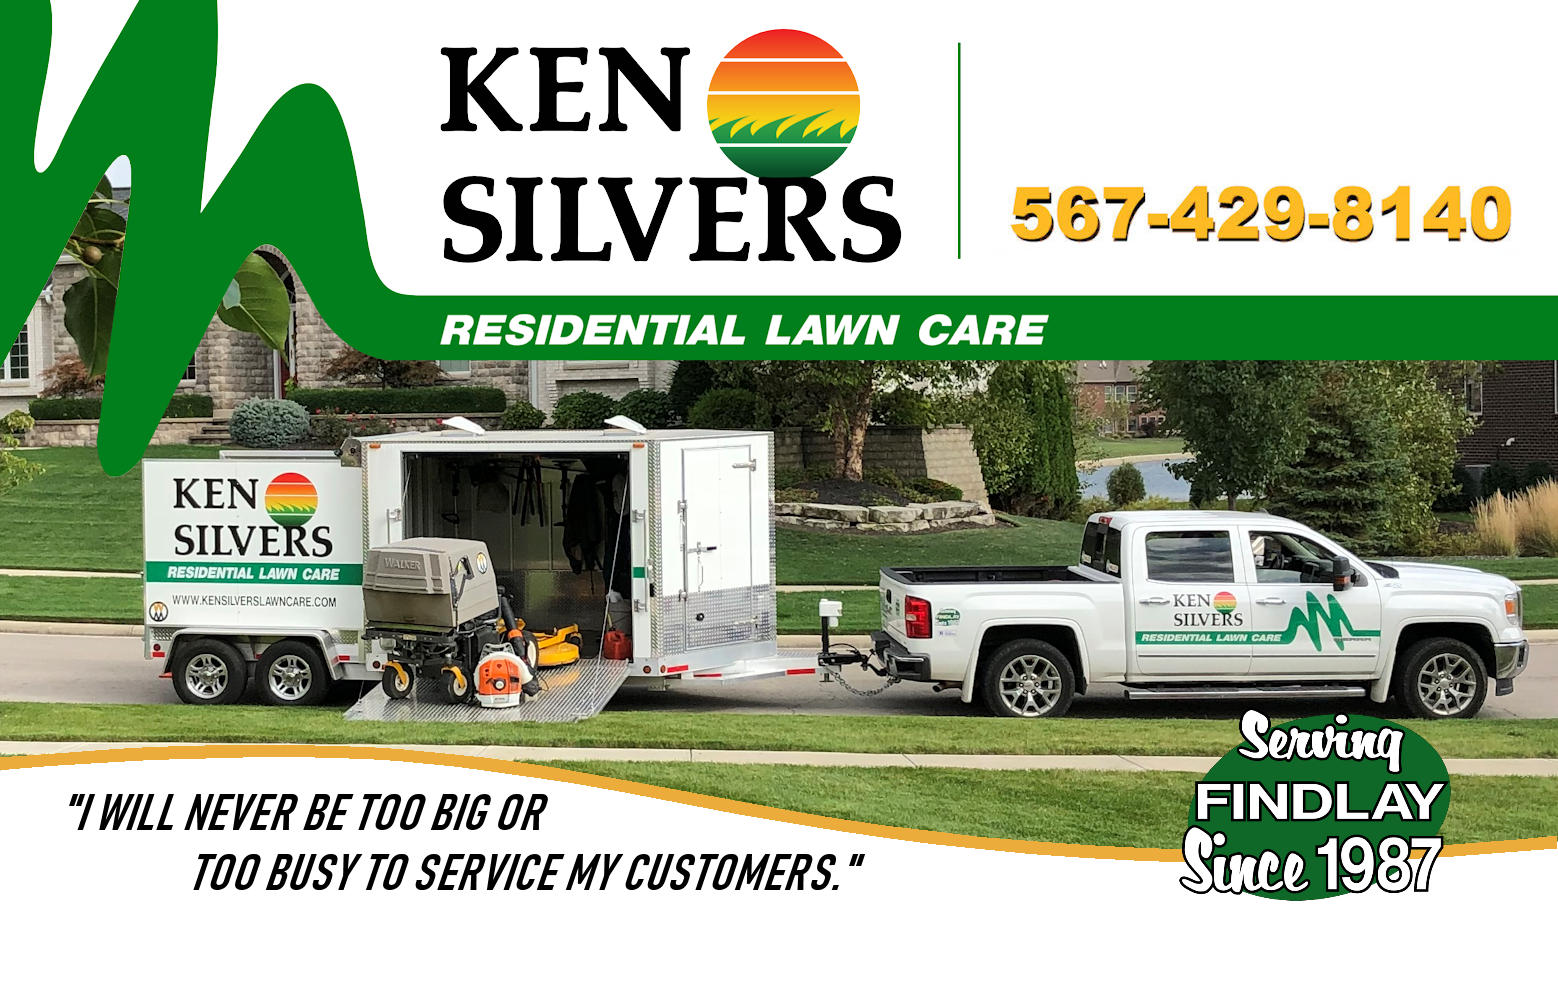 Ken Silvers Residential Lawn Care